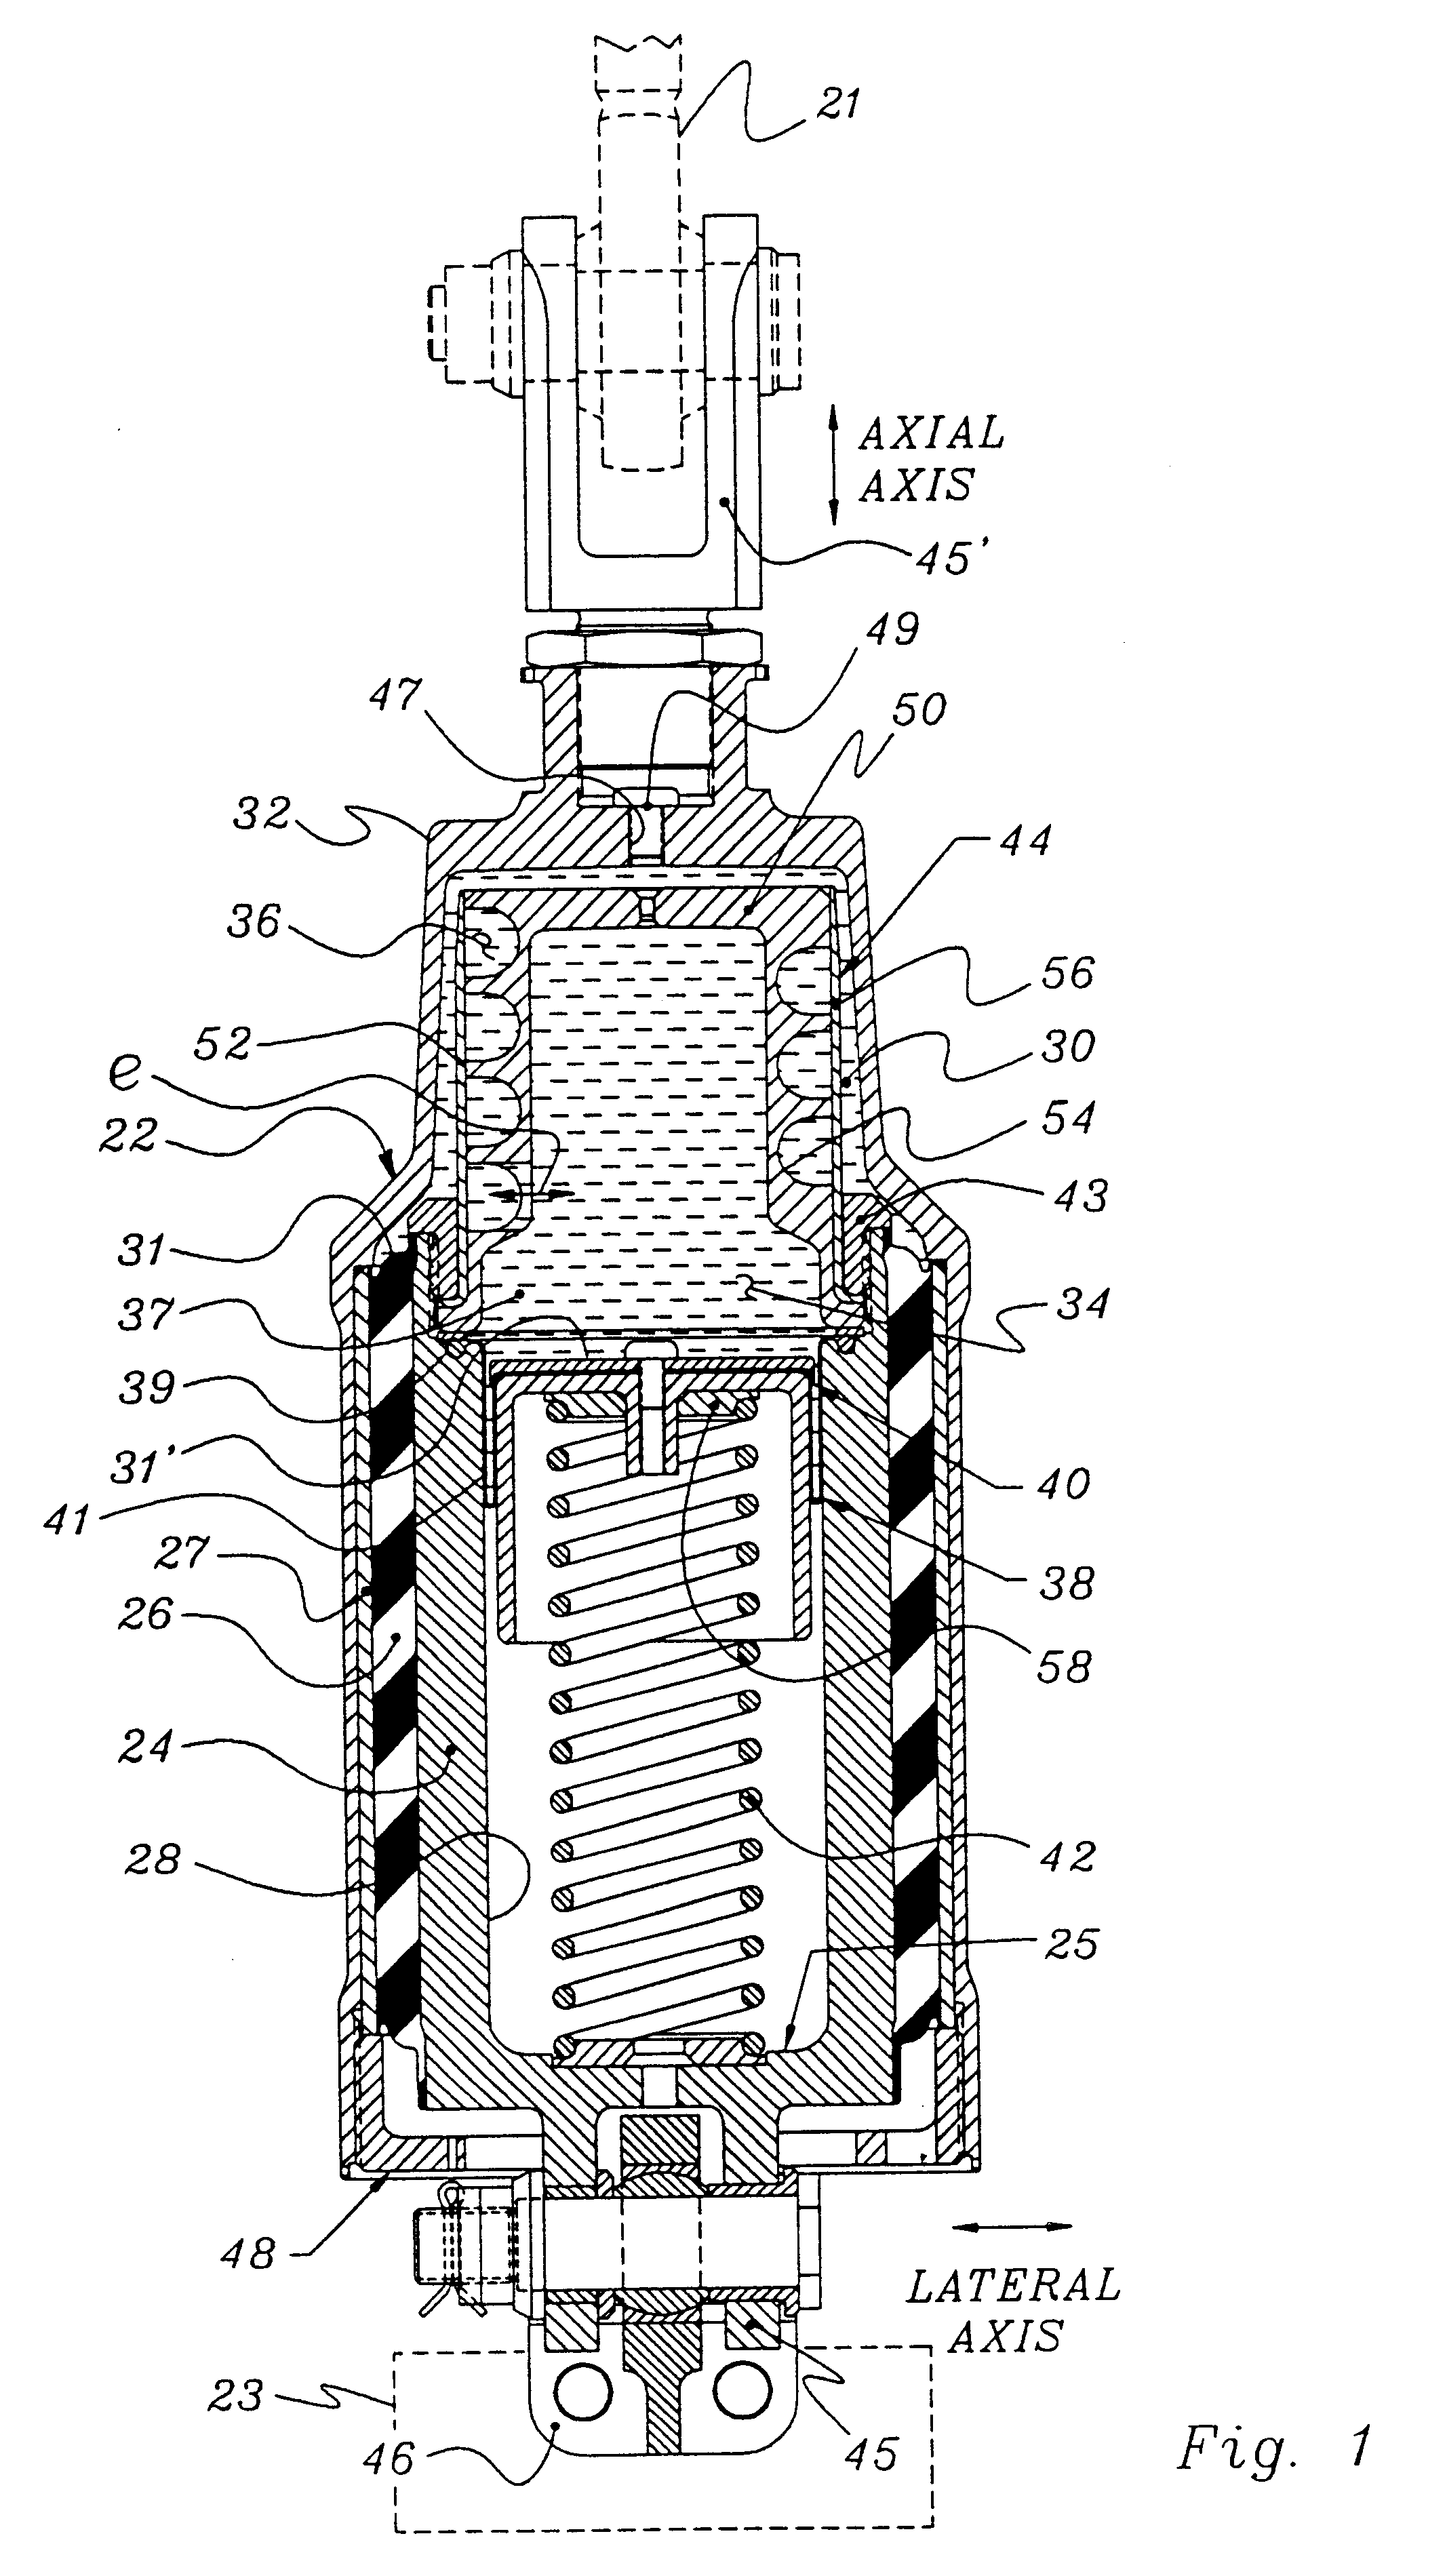 Fluid and elastomer apparatus